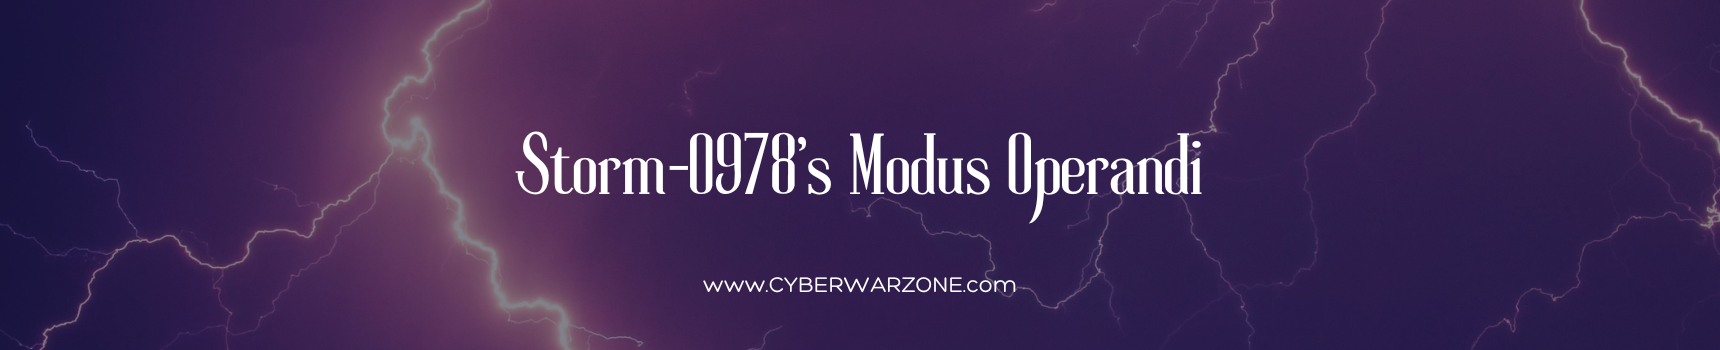 Storm-0978's Modus Operandi